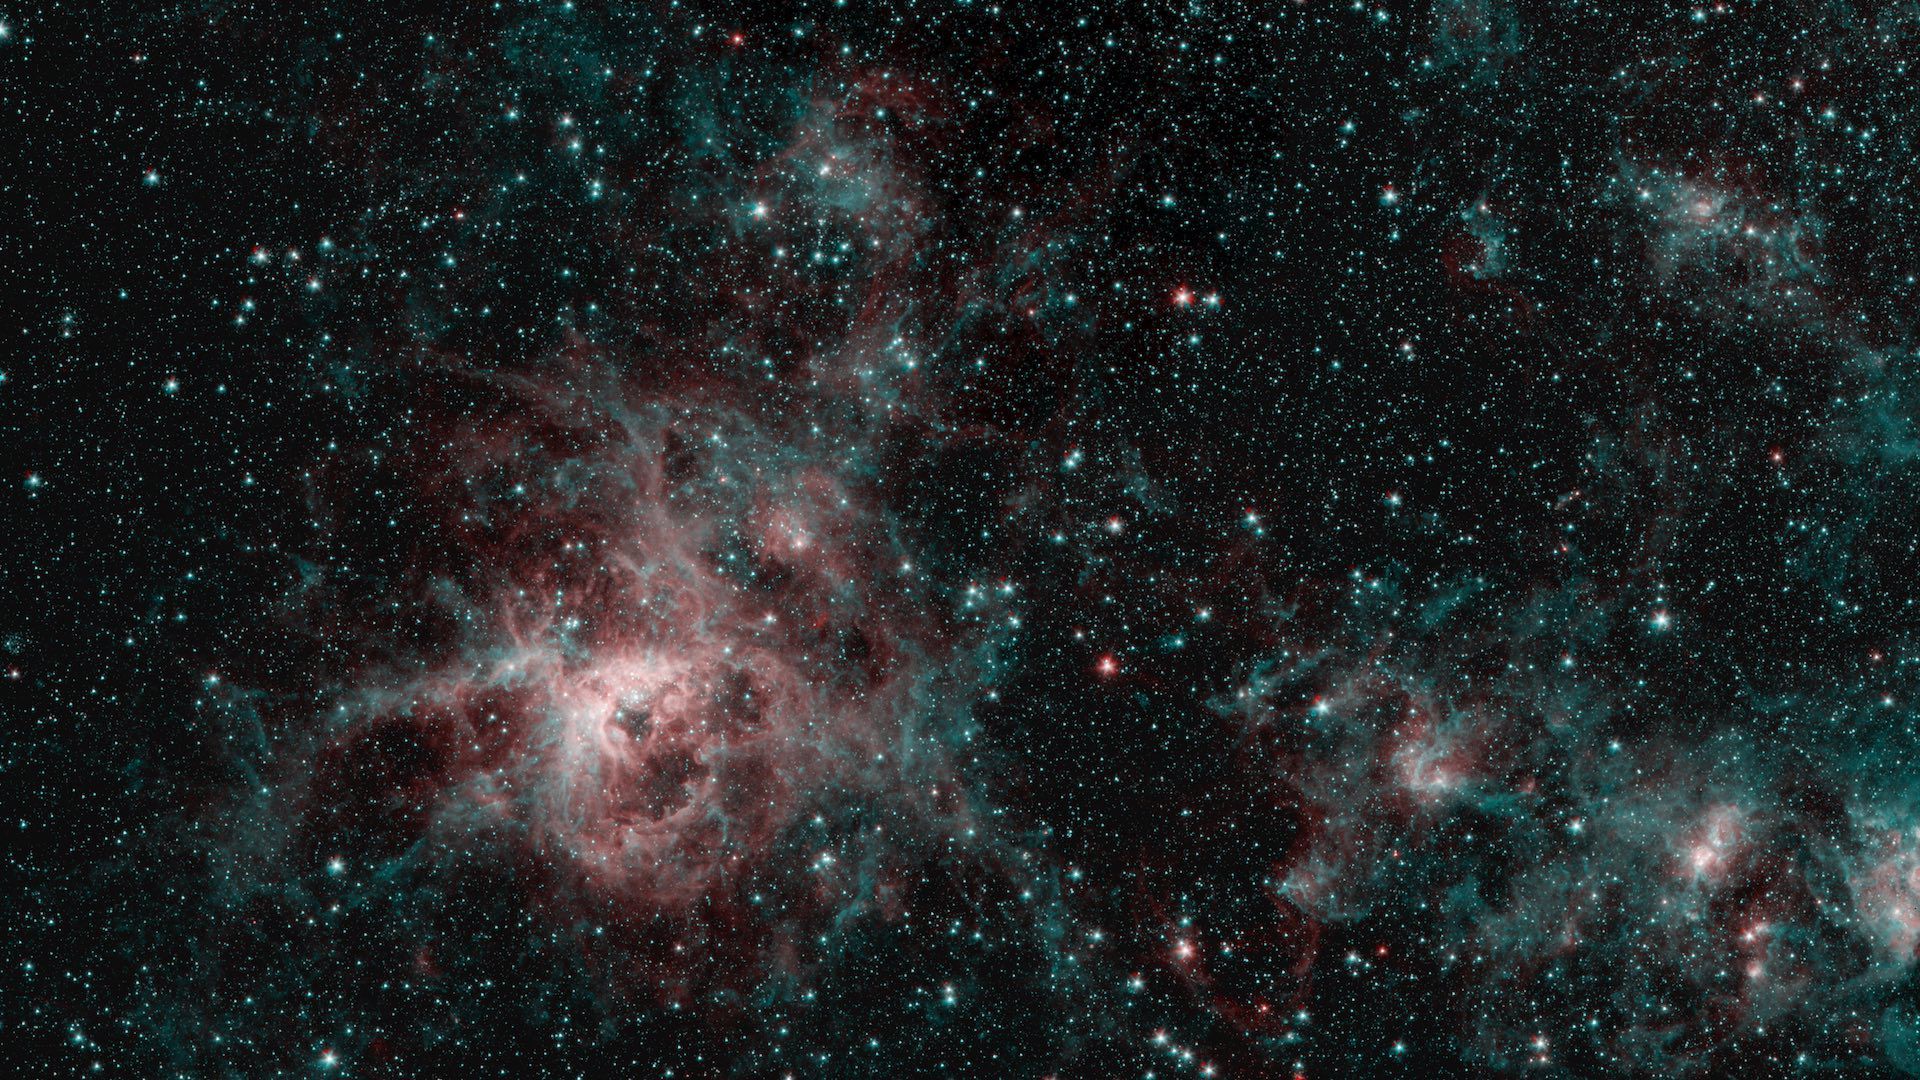 The Tarantula Nebula as seen by the Spitzer Space Telescope